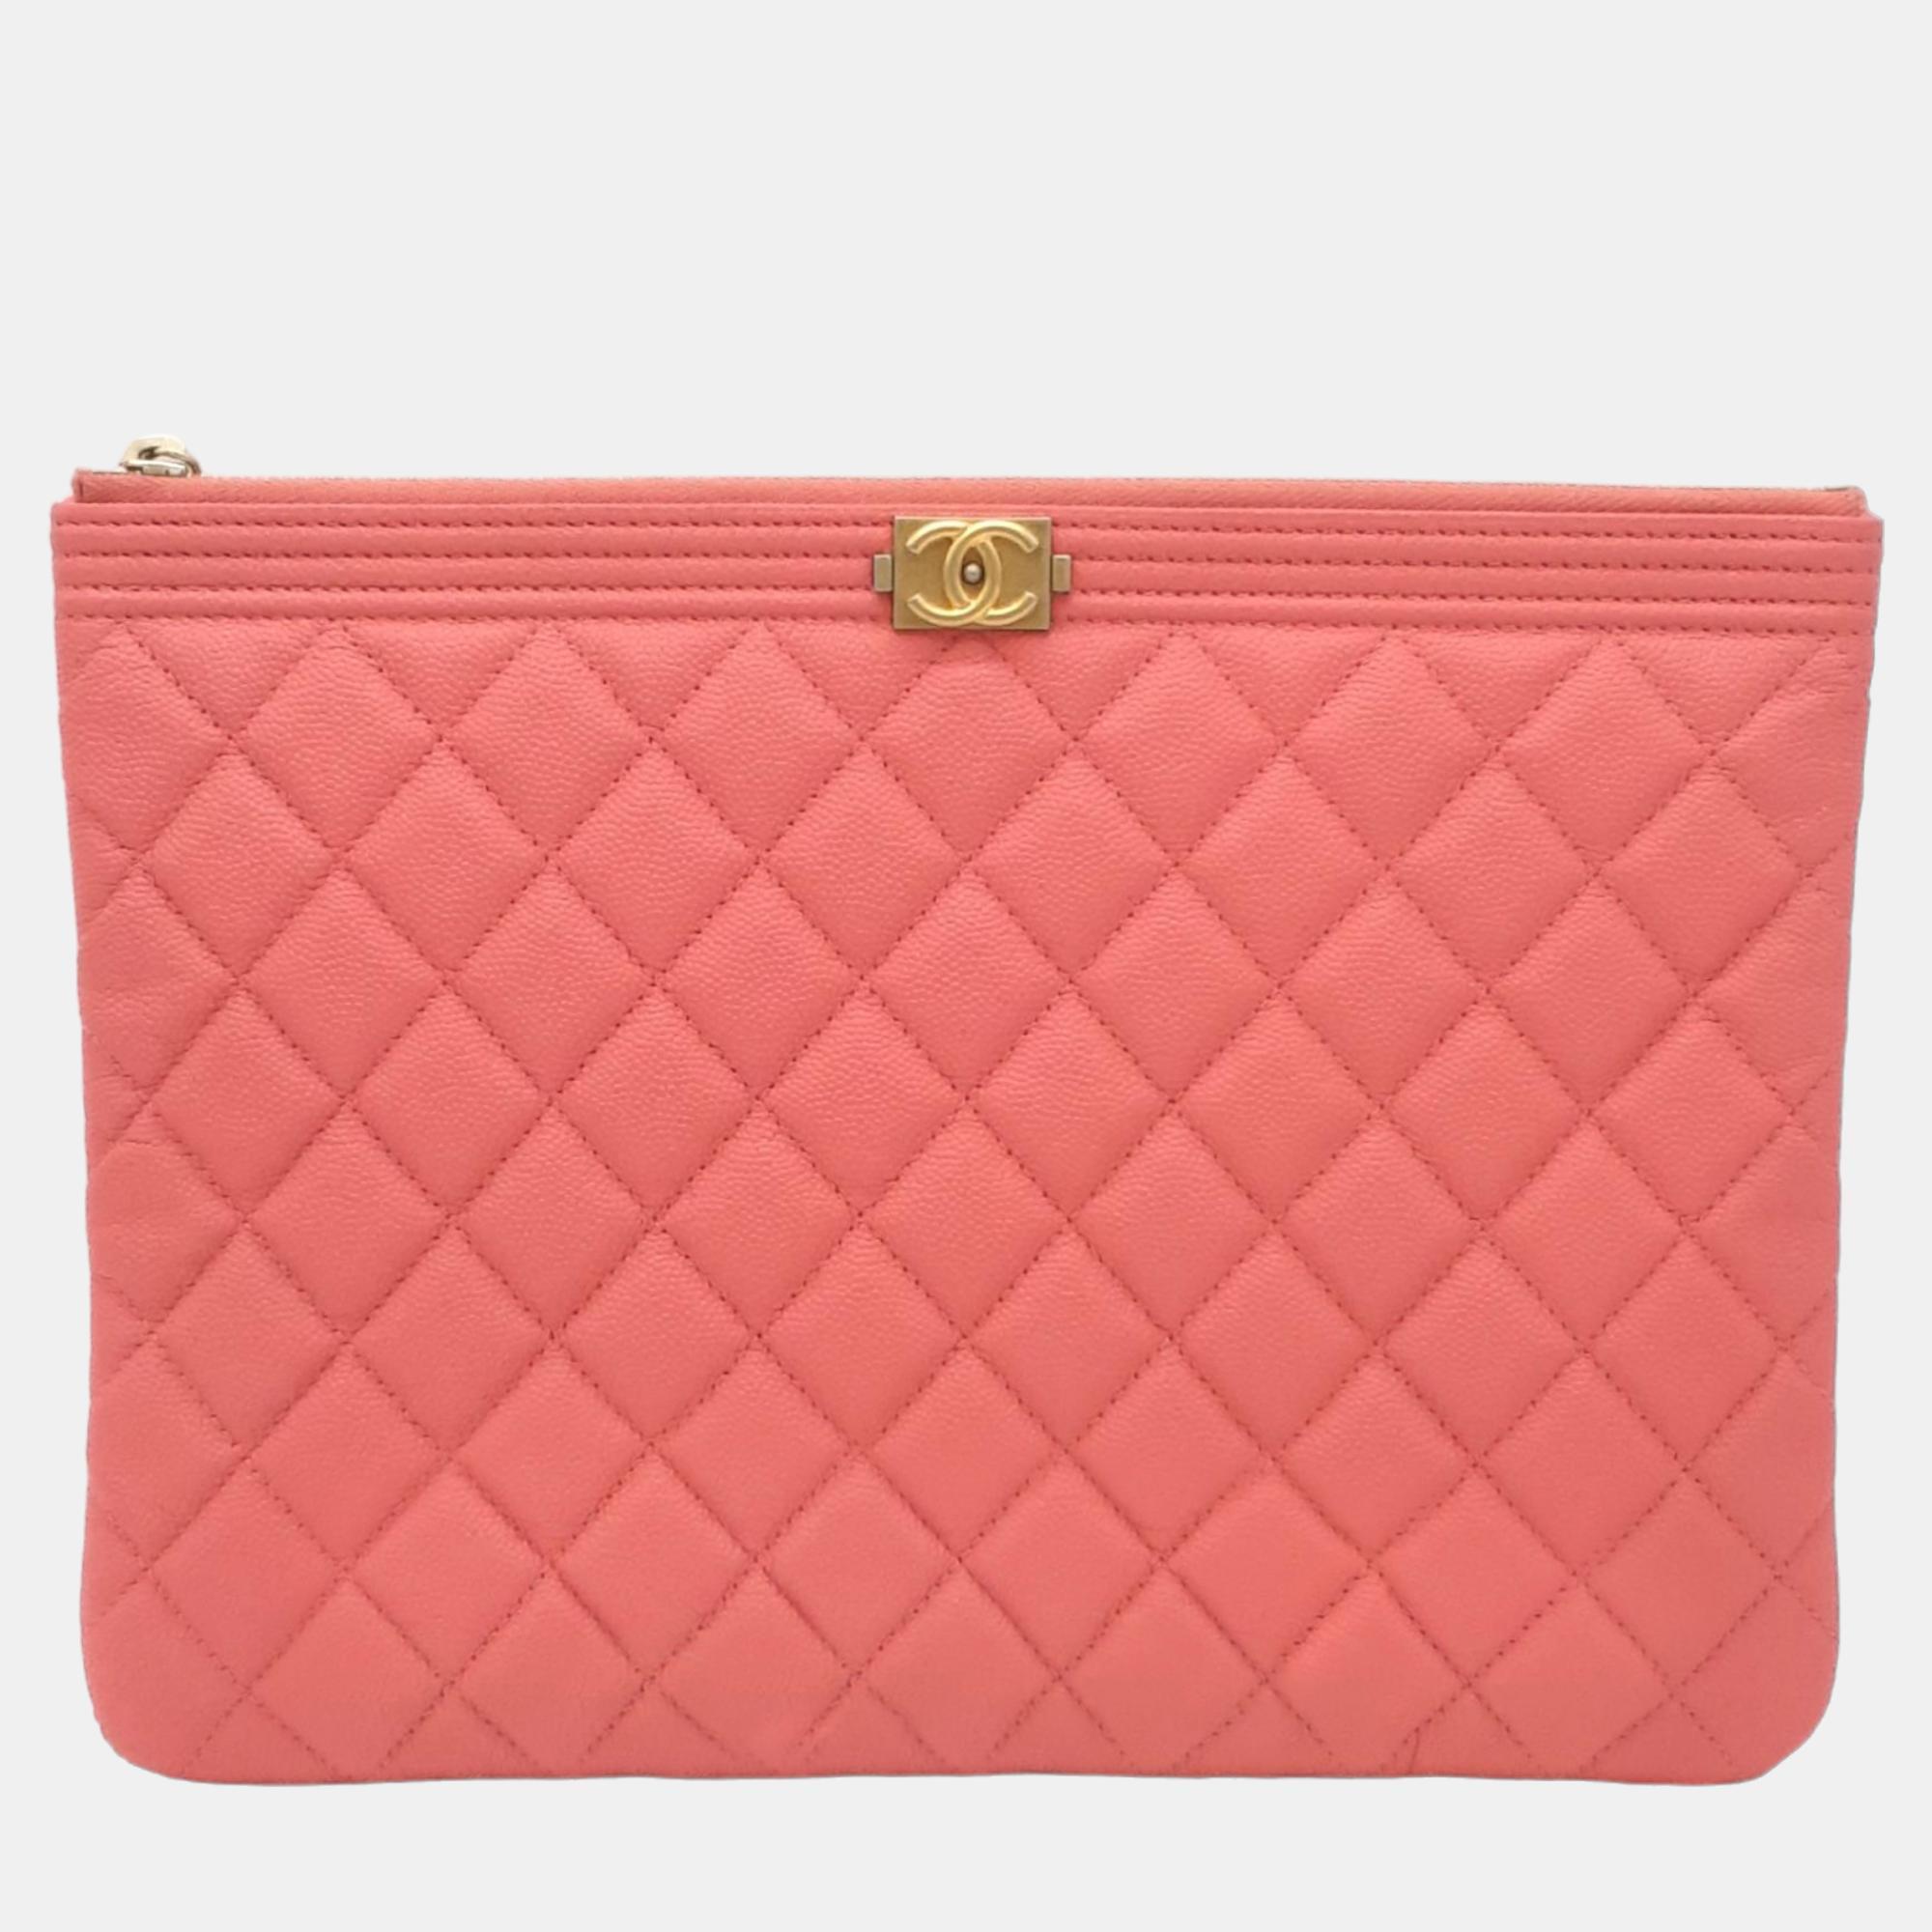 Chanel pink caviar leather o case quilted medium boy clutch bag